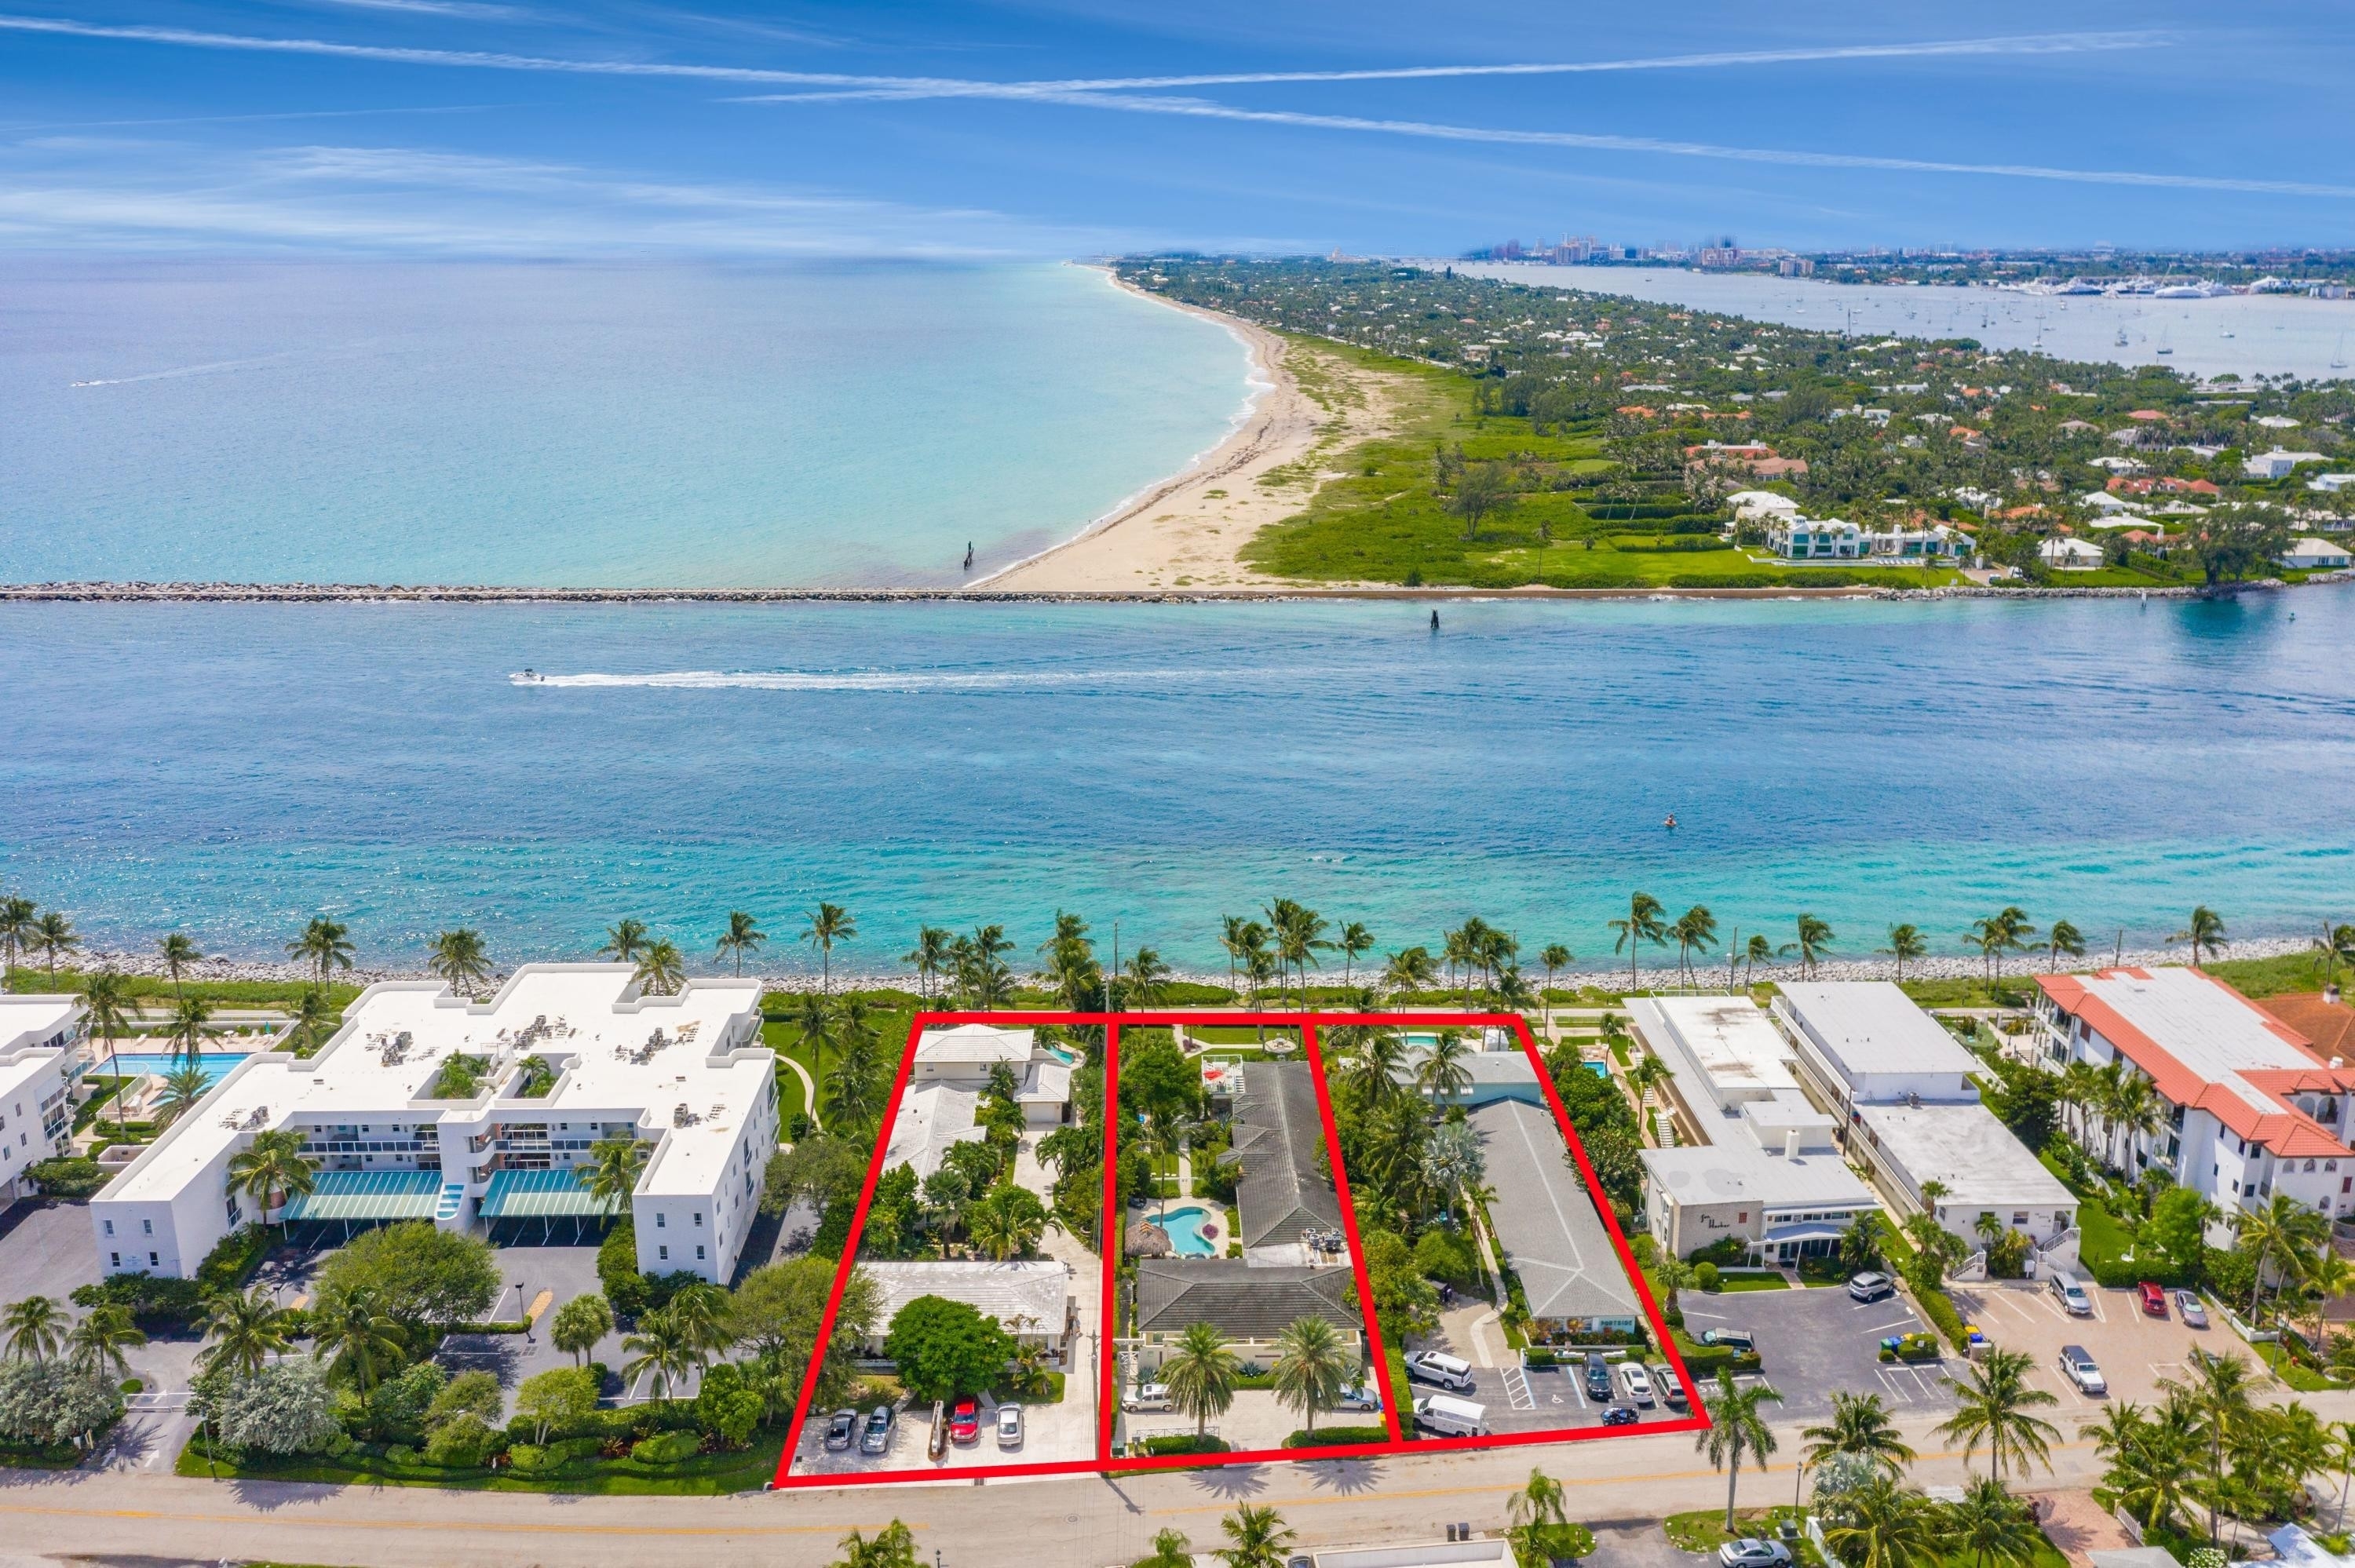 Condominium for Sale at 150 Inlet Way, 1e Palm Beach Shores, Florida 33404